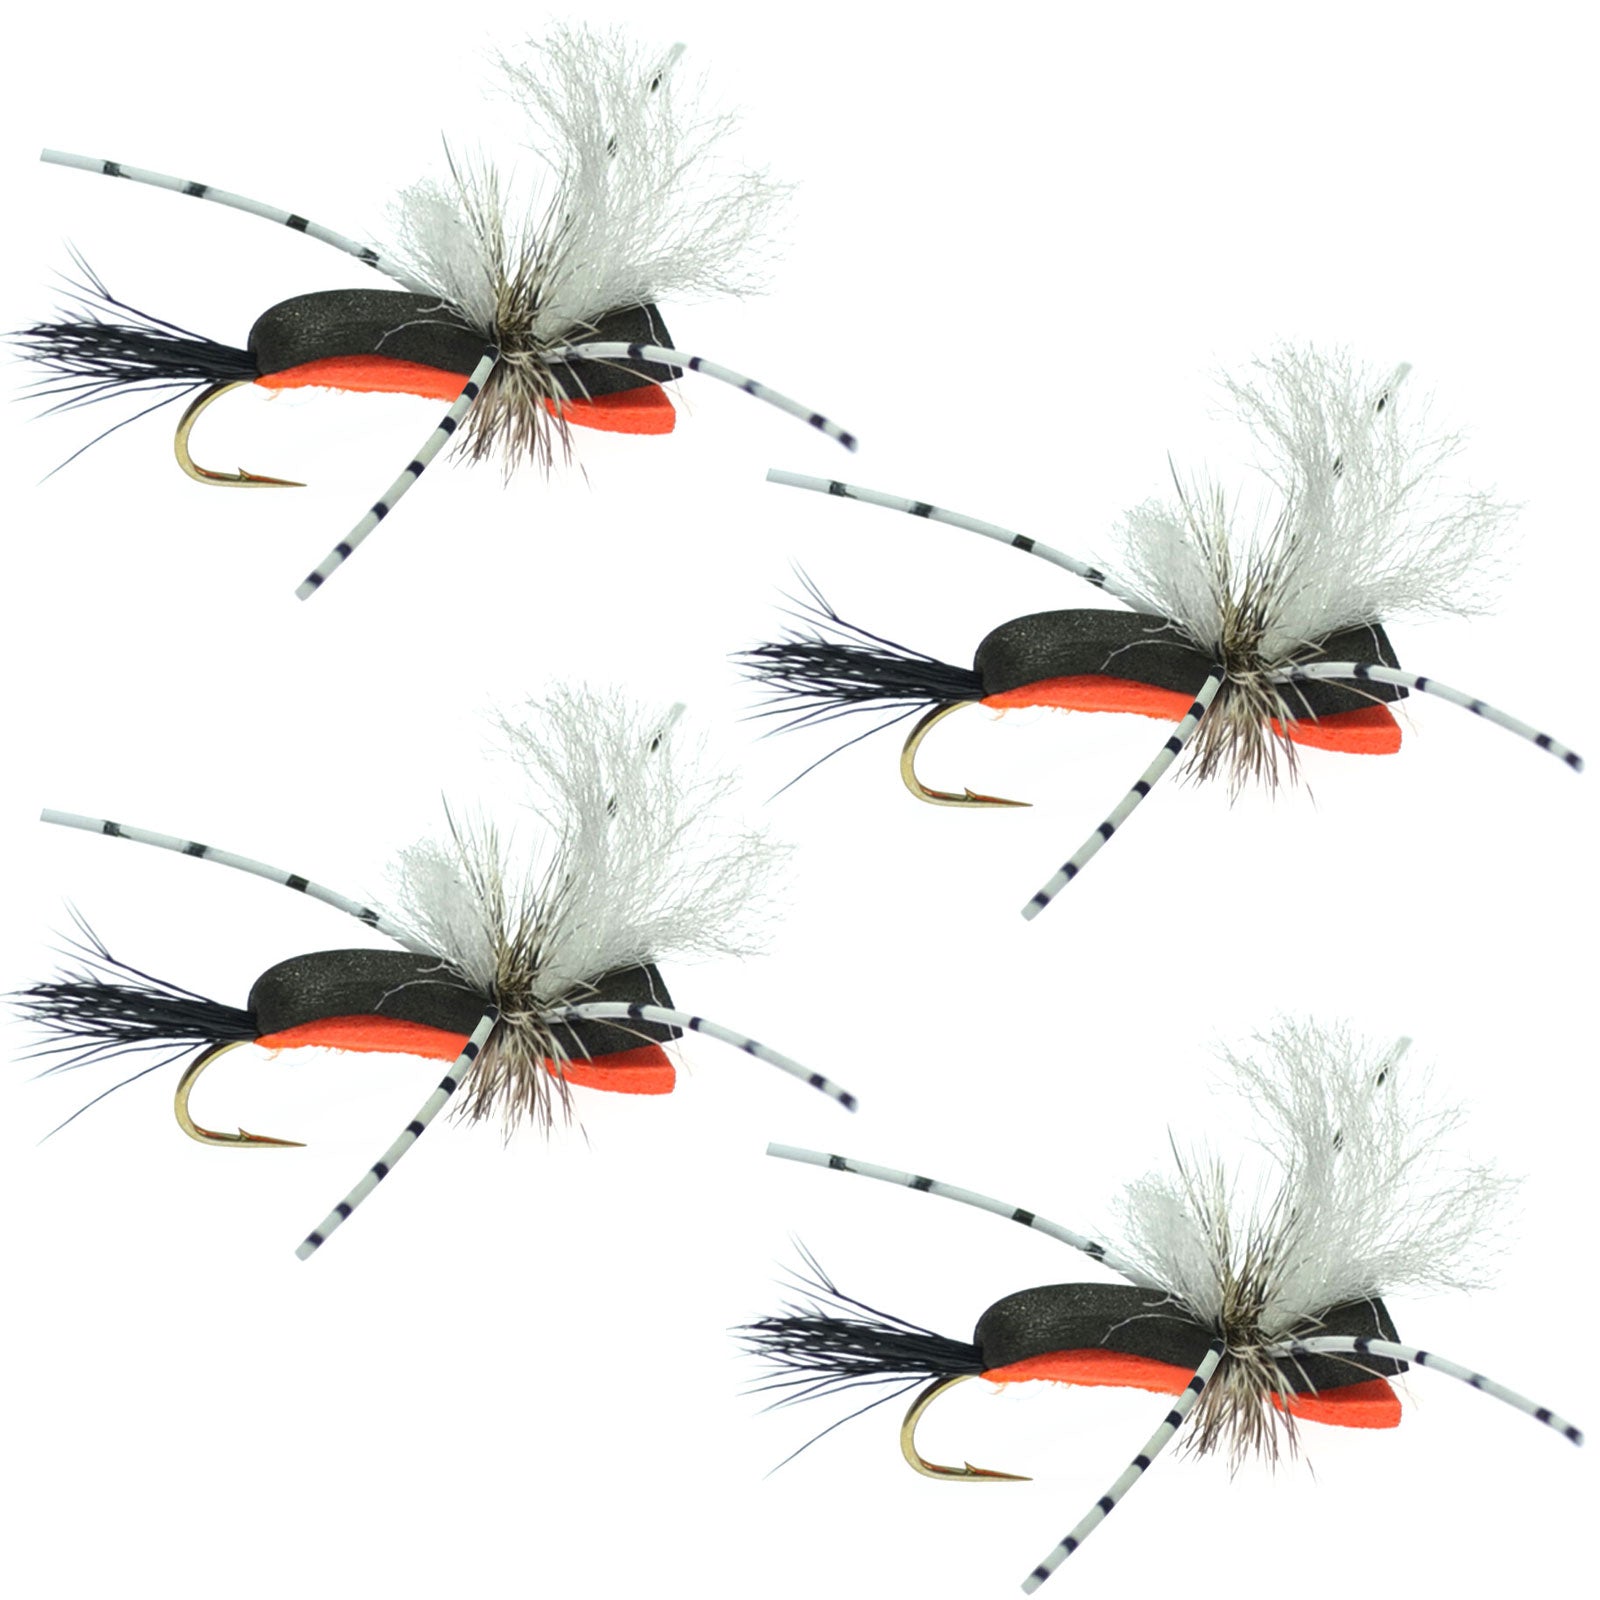 Hippie Stomper Black Orange Foam Body Grasshopper Dry Fly - 4 Flies Si